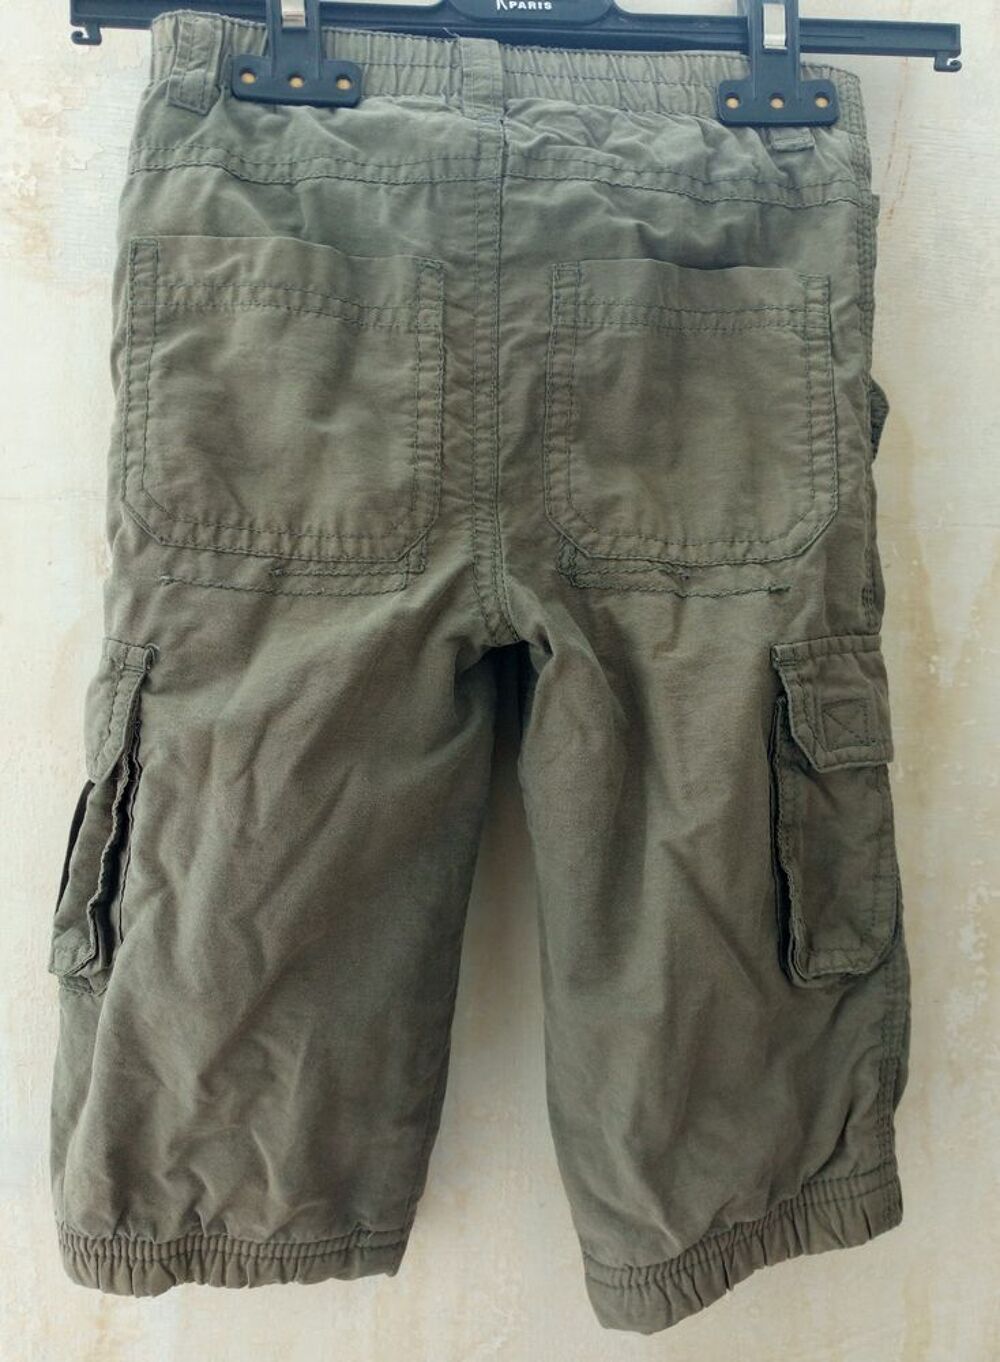 Pantalon Cargo/Battle ? Kaki ? DPAM ? 12 mois (74 cm) Puriculture